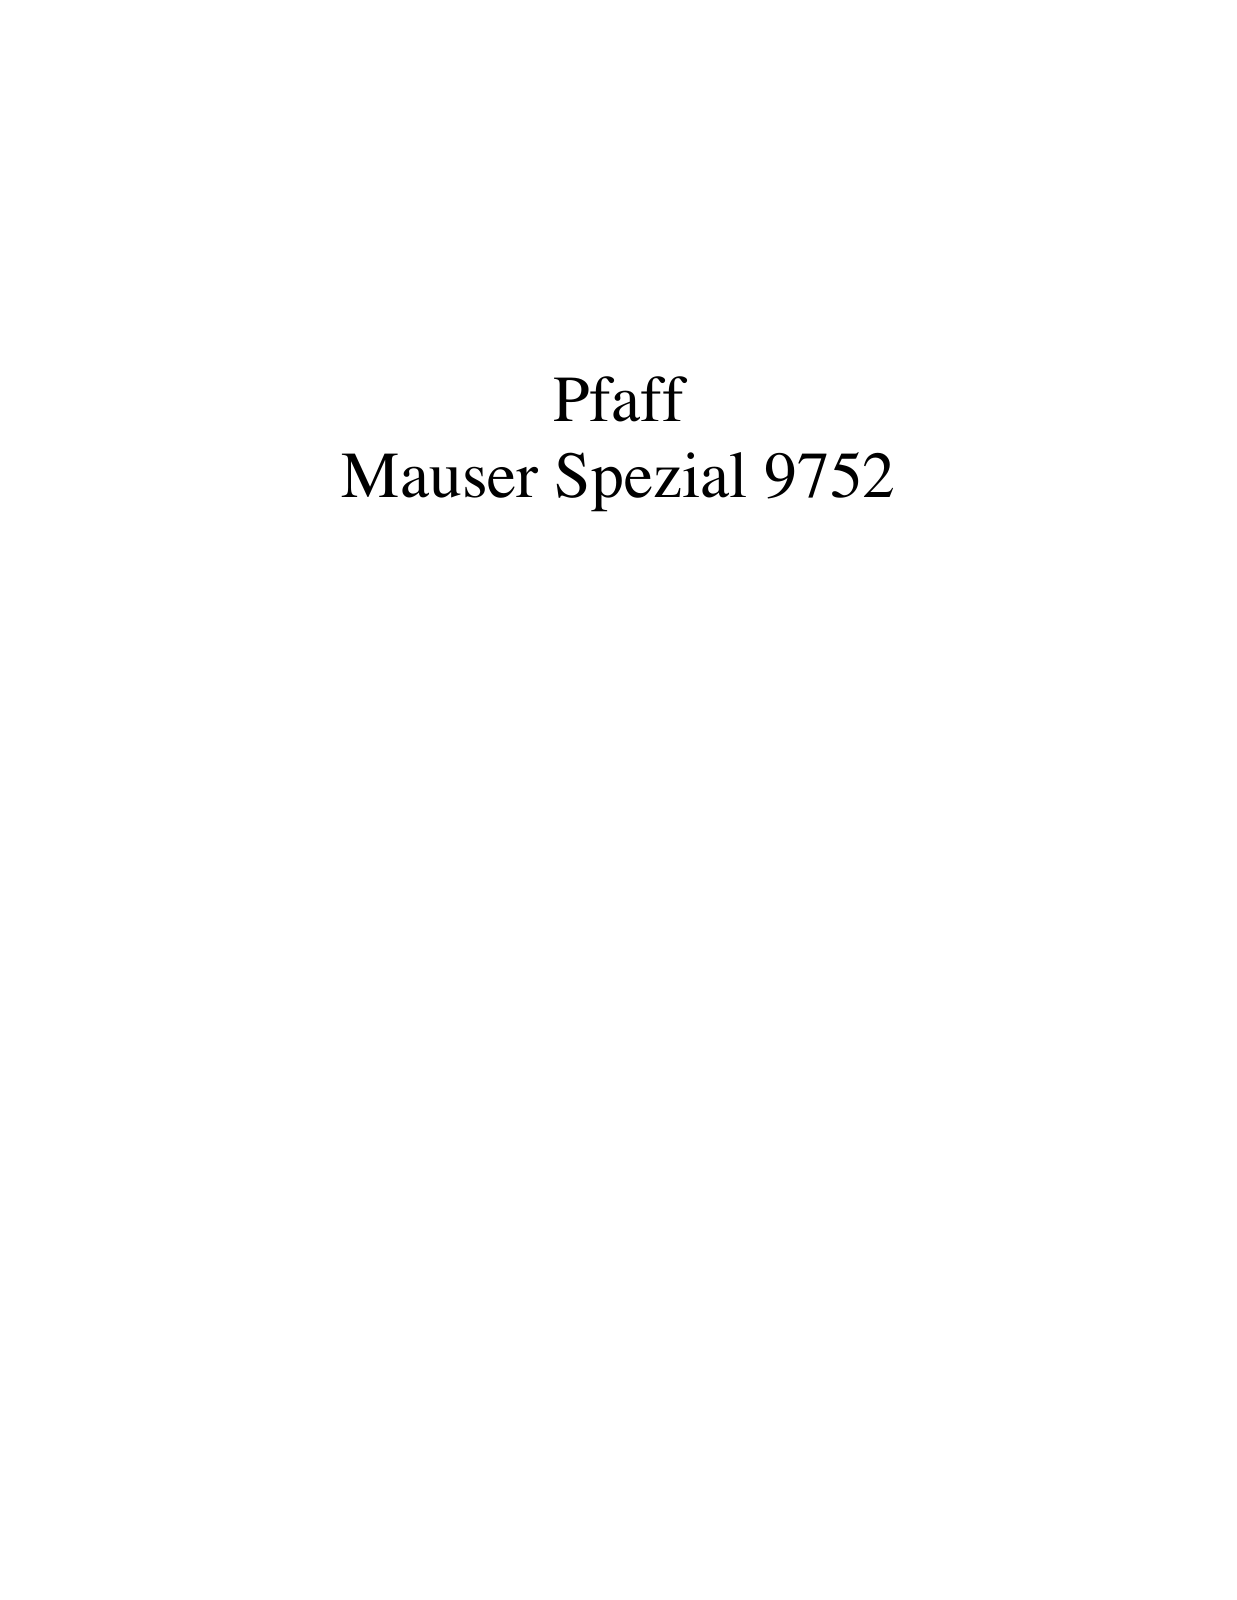 PFAFF Mauser Spezial 9752 Parts List